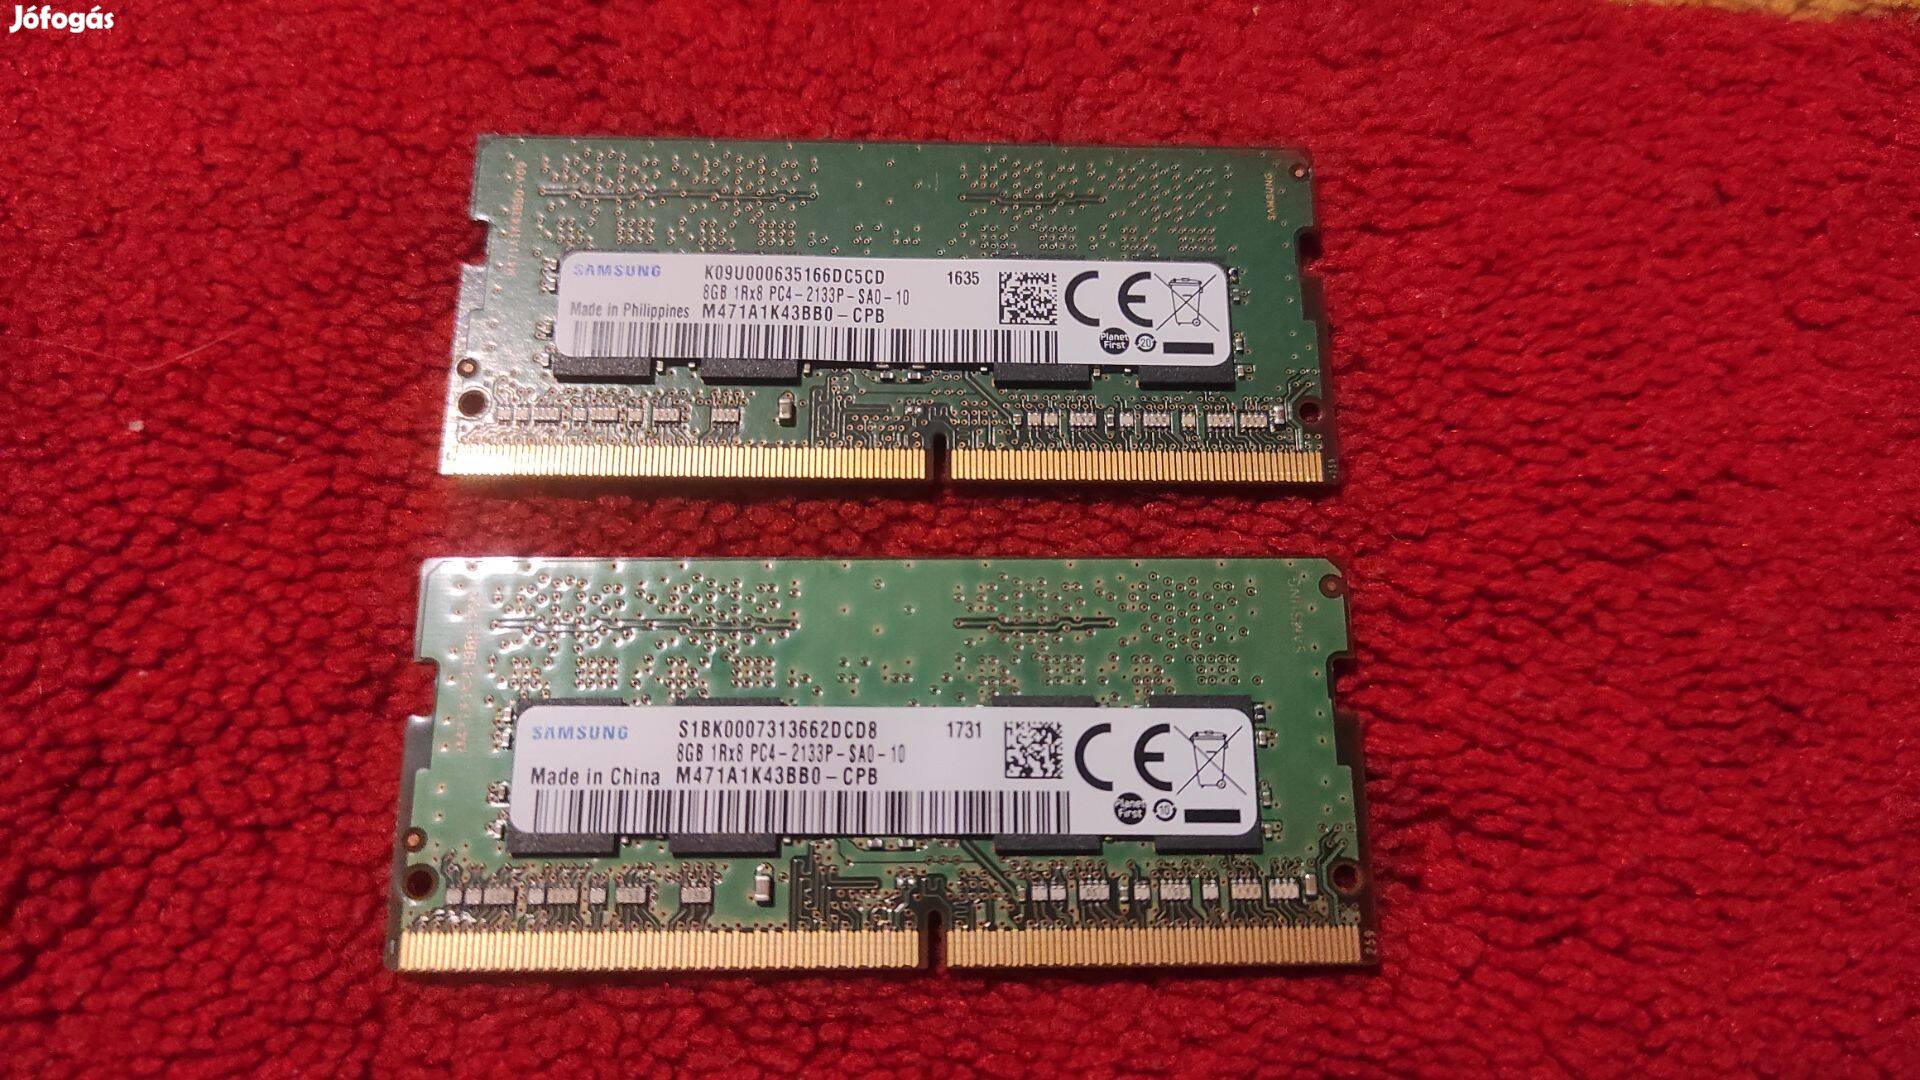 2x8GB Samsung DDR4 RAM (6e Ft/db, 11e Ft/2db)